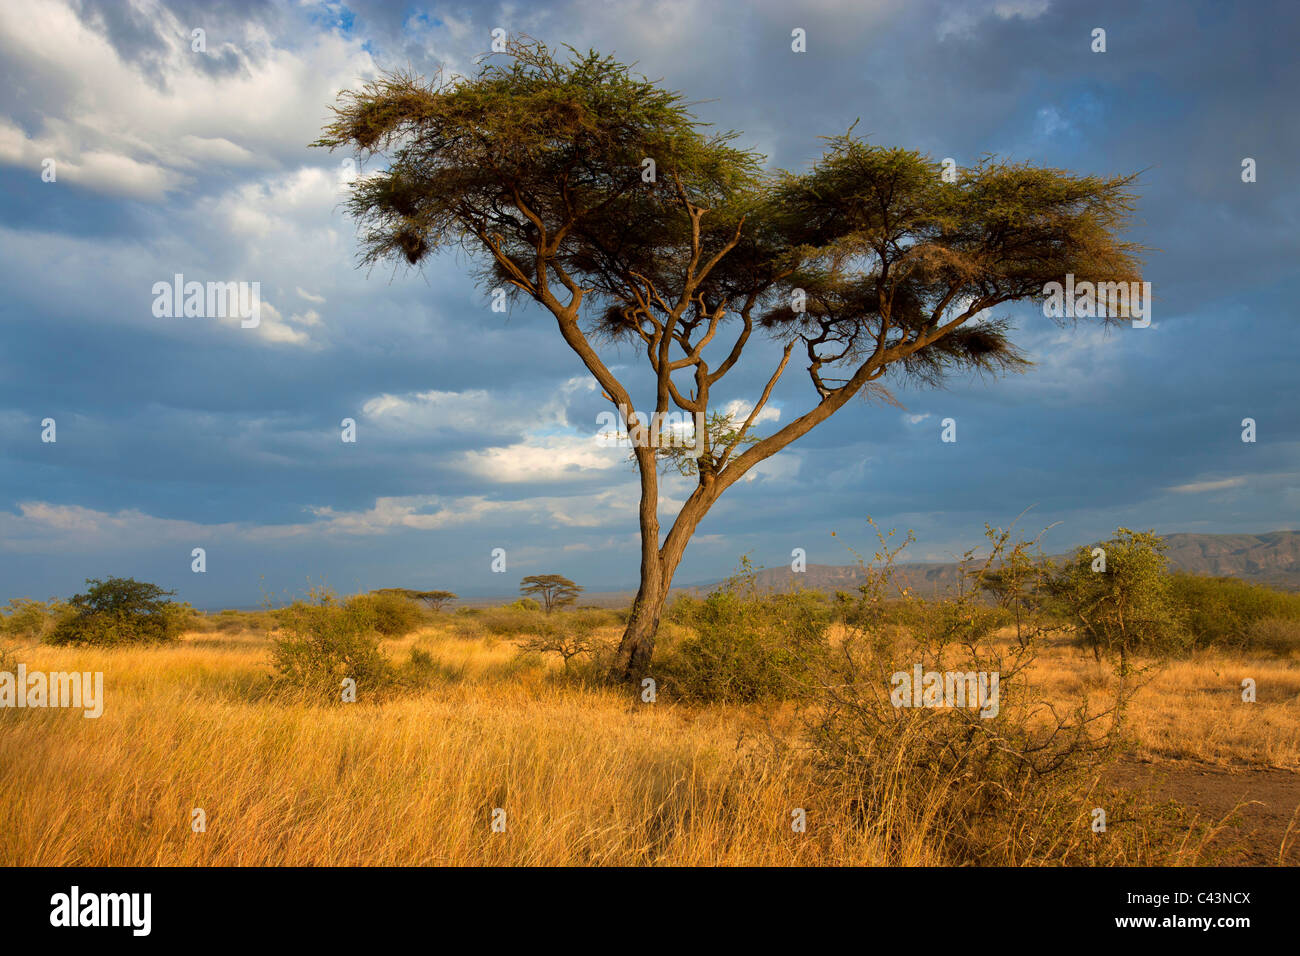 Inondata, parco nazionale, Africa, Etiopia, savana, erba, alberi, acacia, nuvole, luce della sera Foto Stock